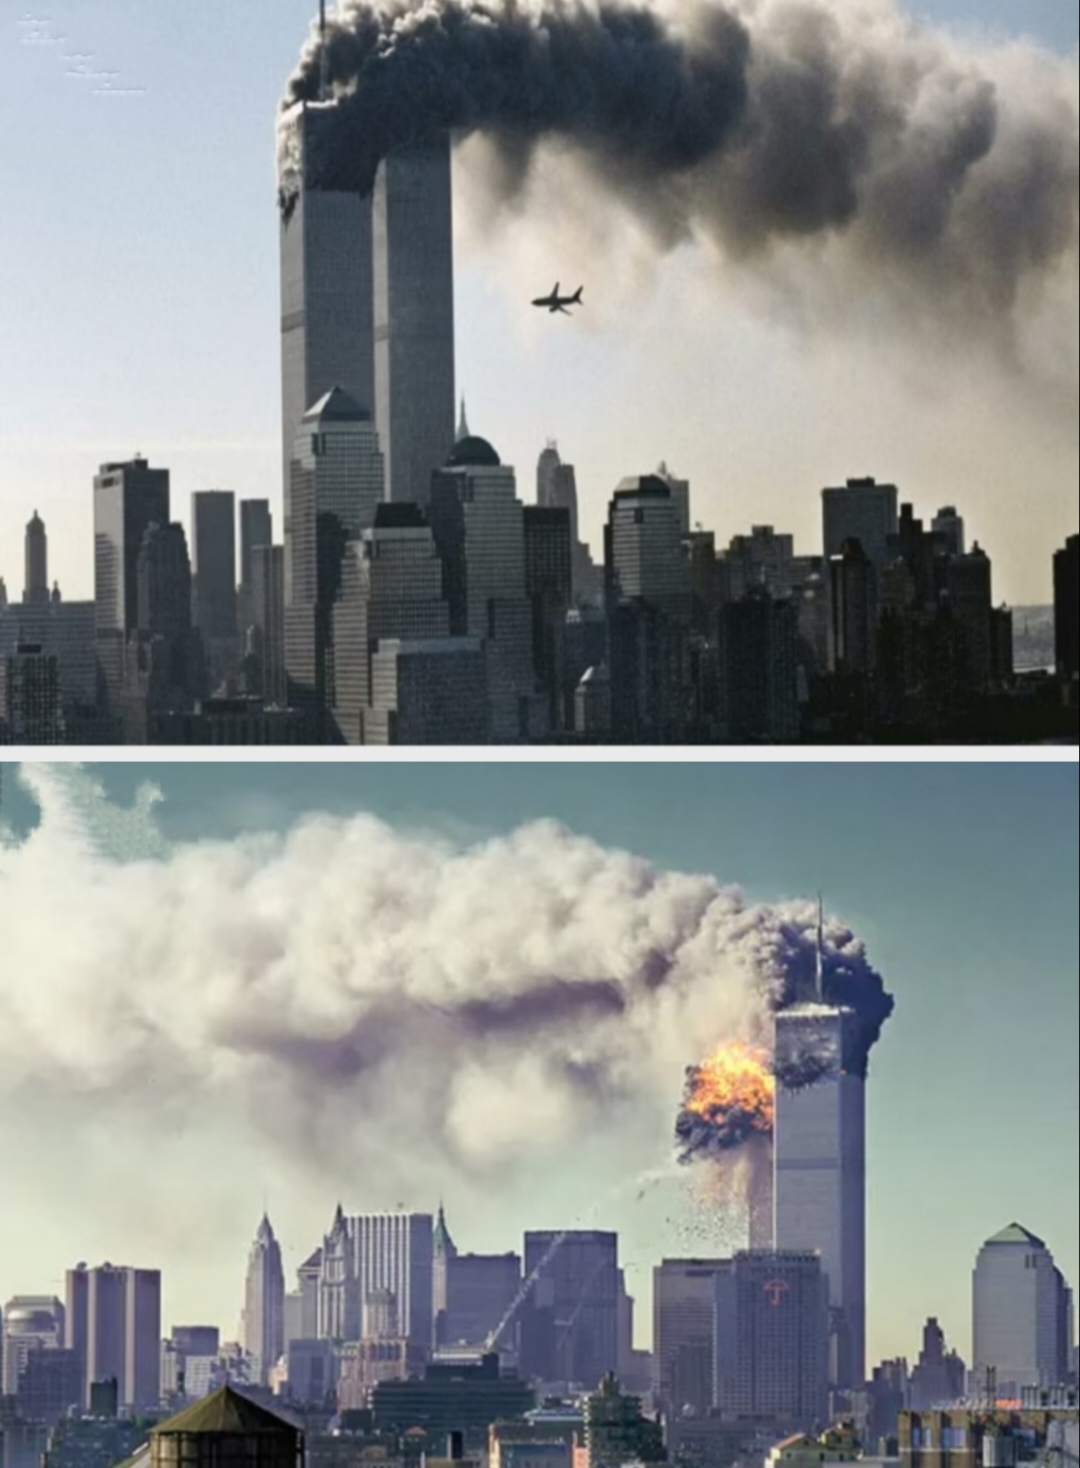 9/11's image